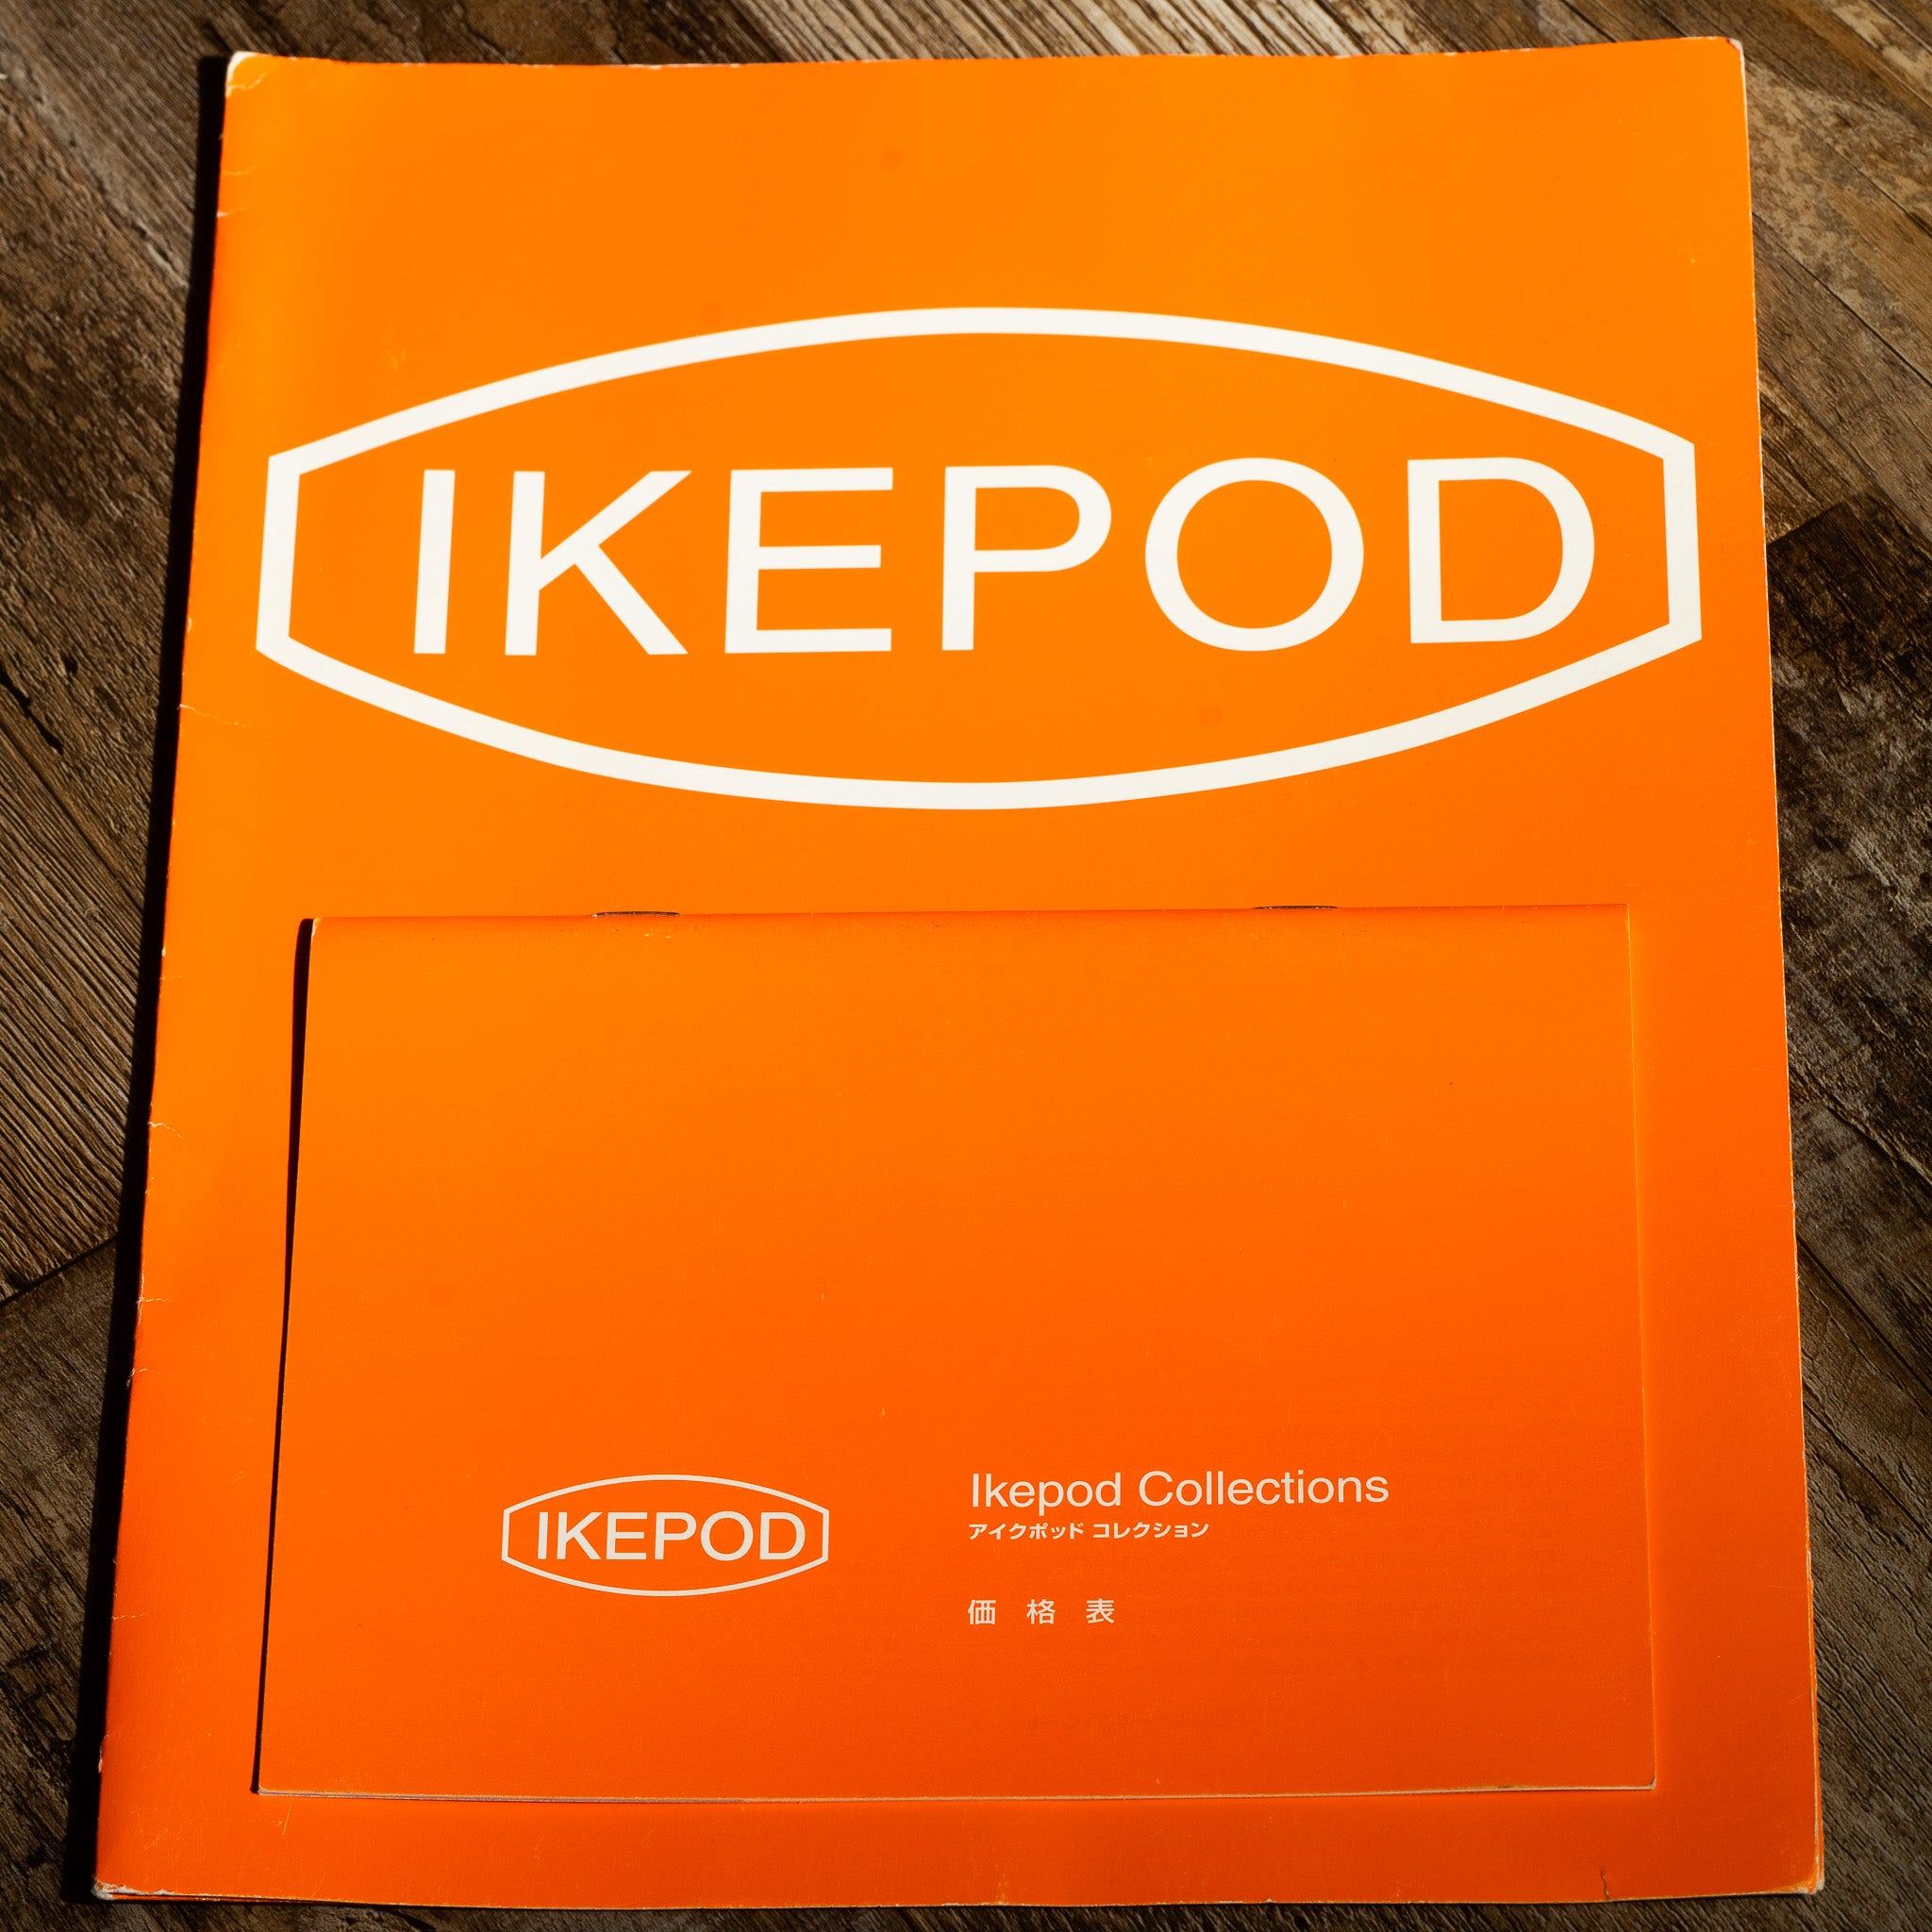 Ikepod Hemipode HD02 - "Tropical Panda" - Incredible Full Collector Set